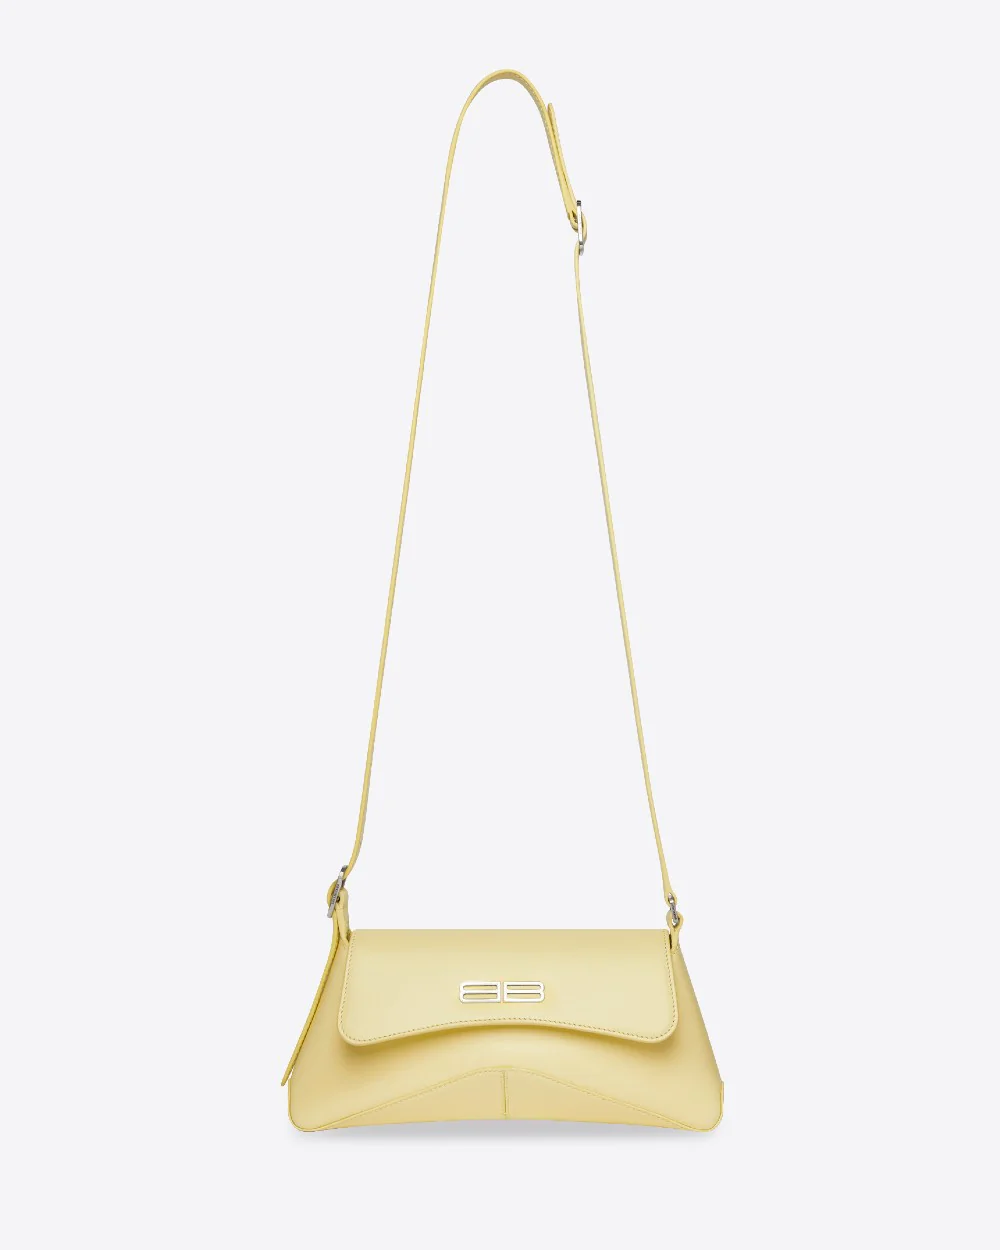 Balenciaga XX Small Flap Bag in Light Yellow Box Calfskin